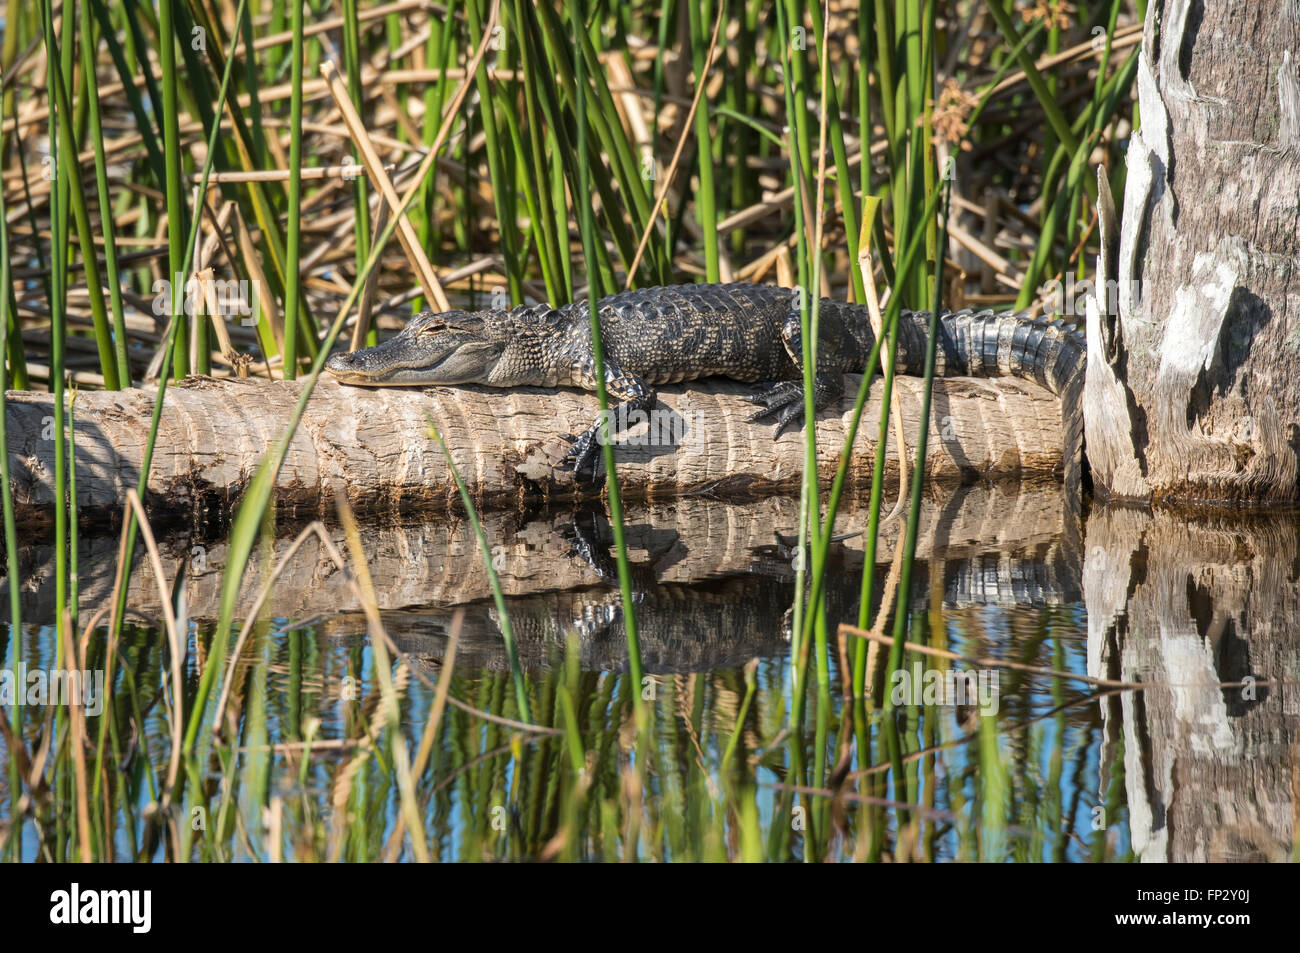 Alligator sunning on log at Viera Wetlands, FL Stock Photo